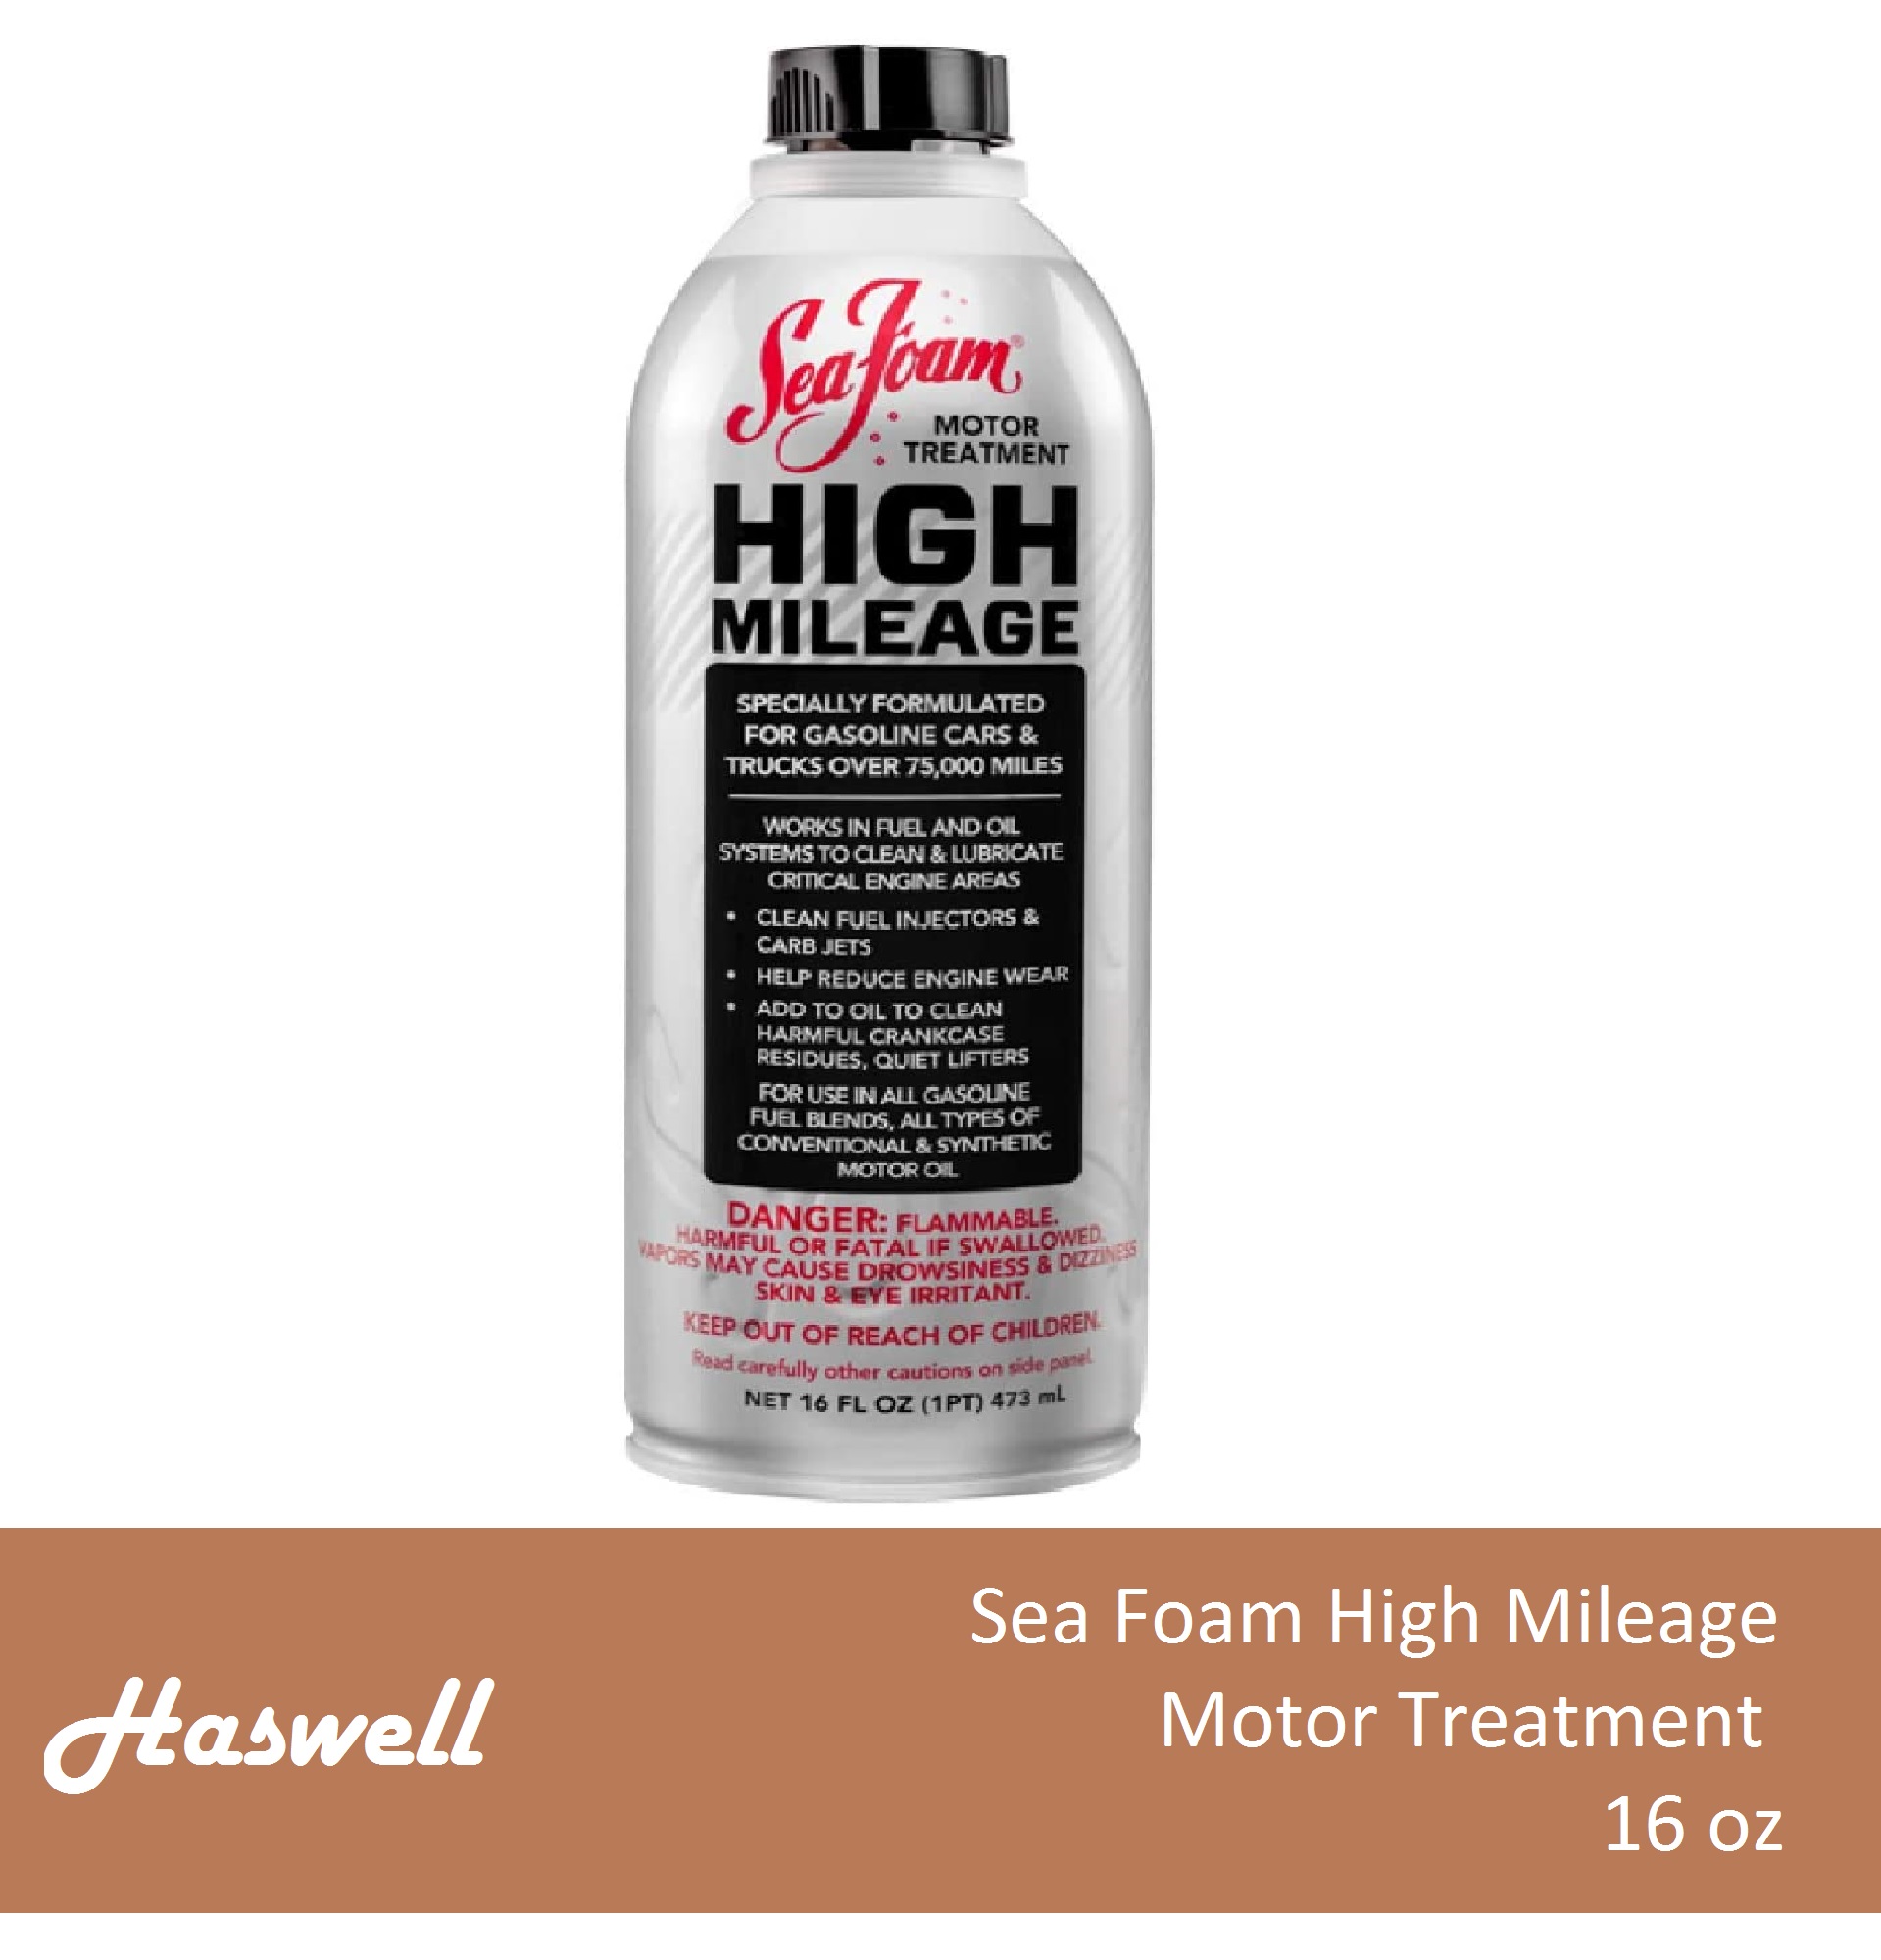 How to use new Sea Foam High Mileage Motor Treatment